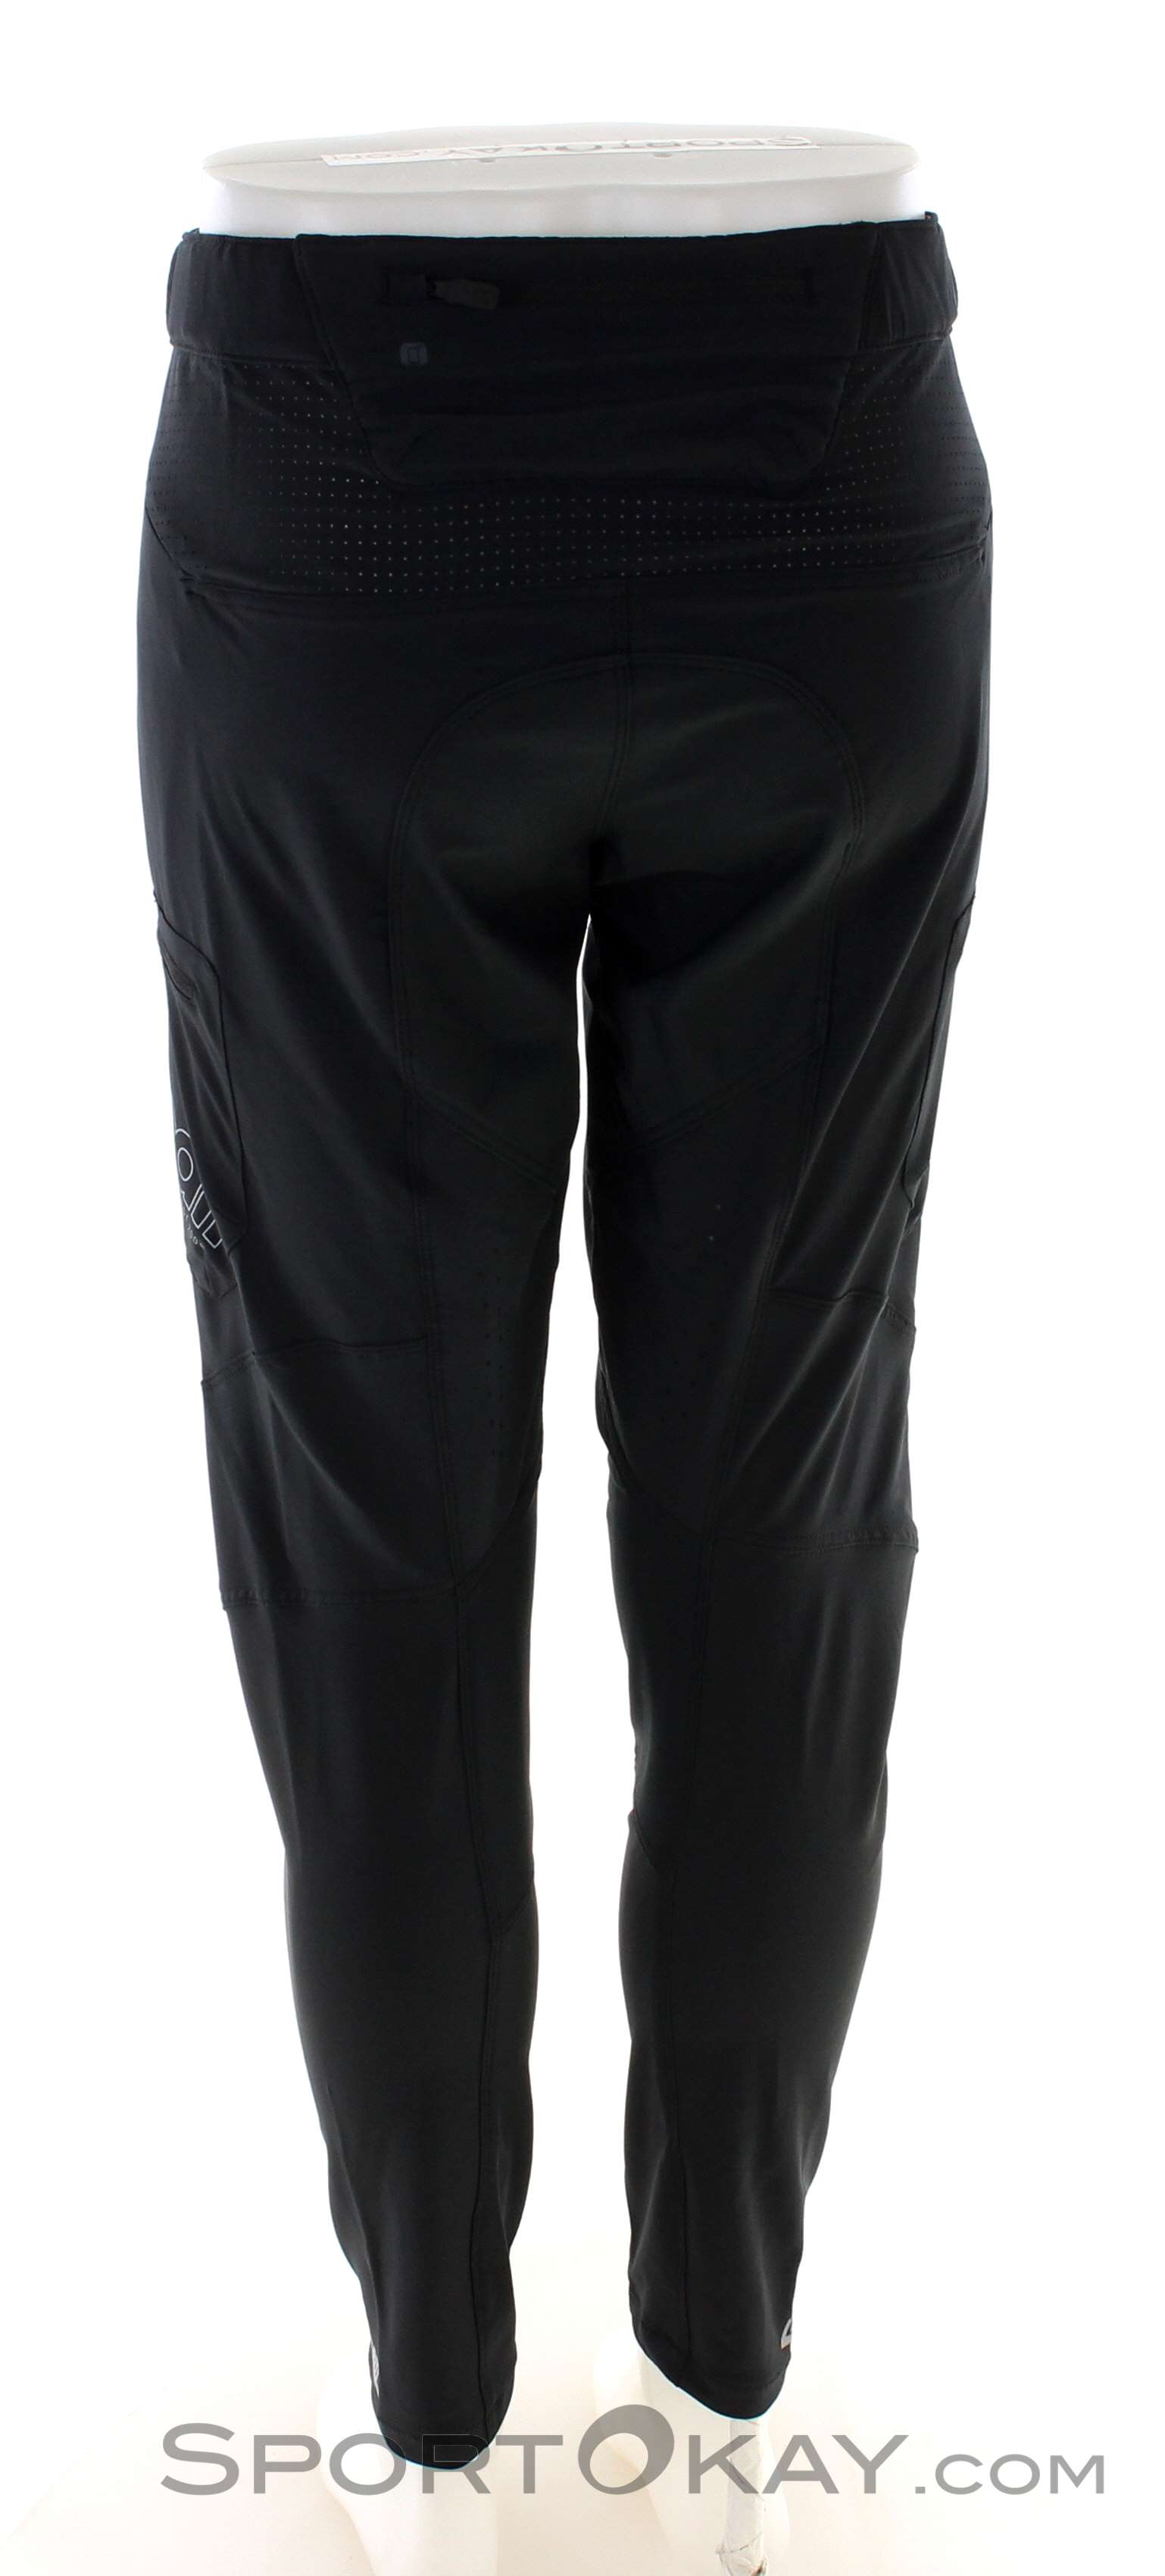 Pantalón MTB Leatt Enduro 3.0 - Negro